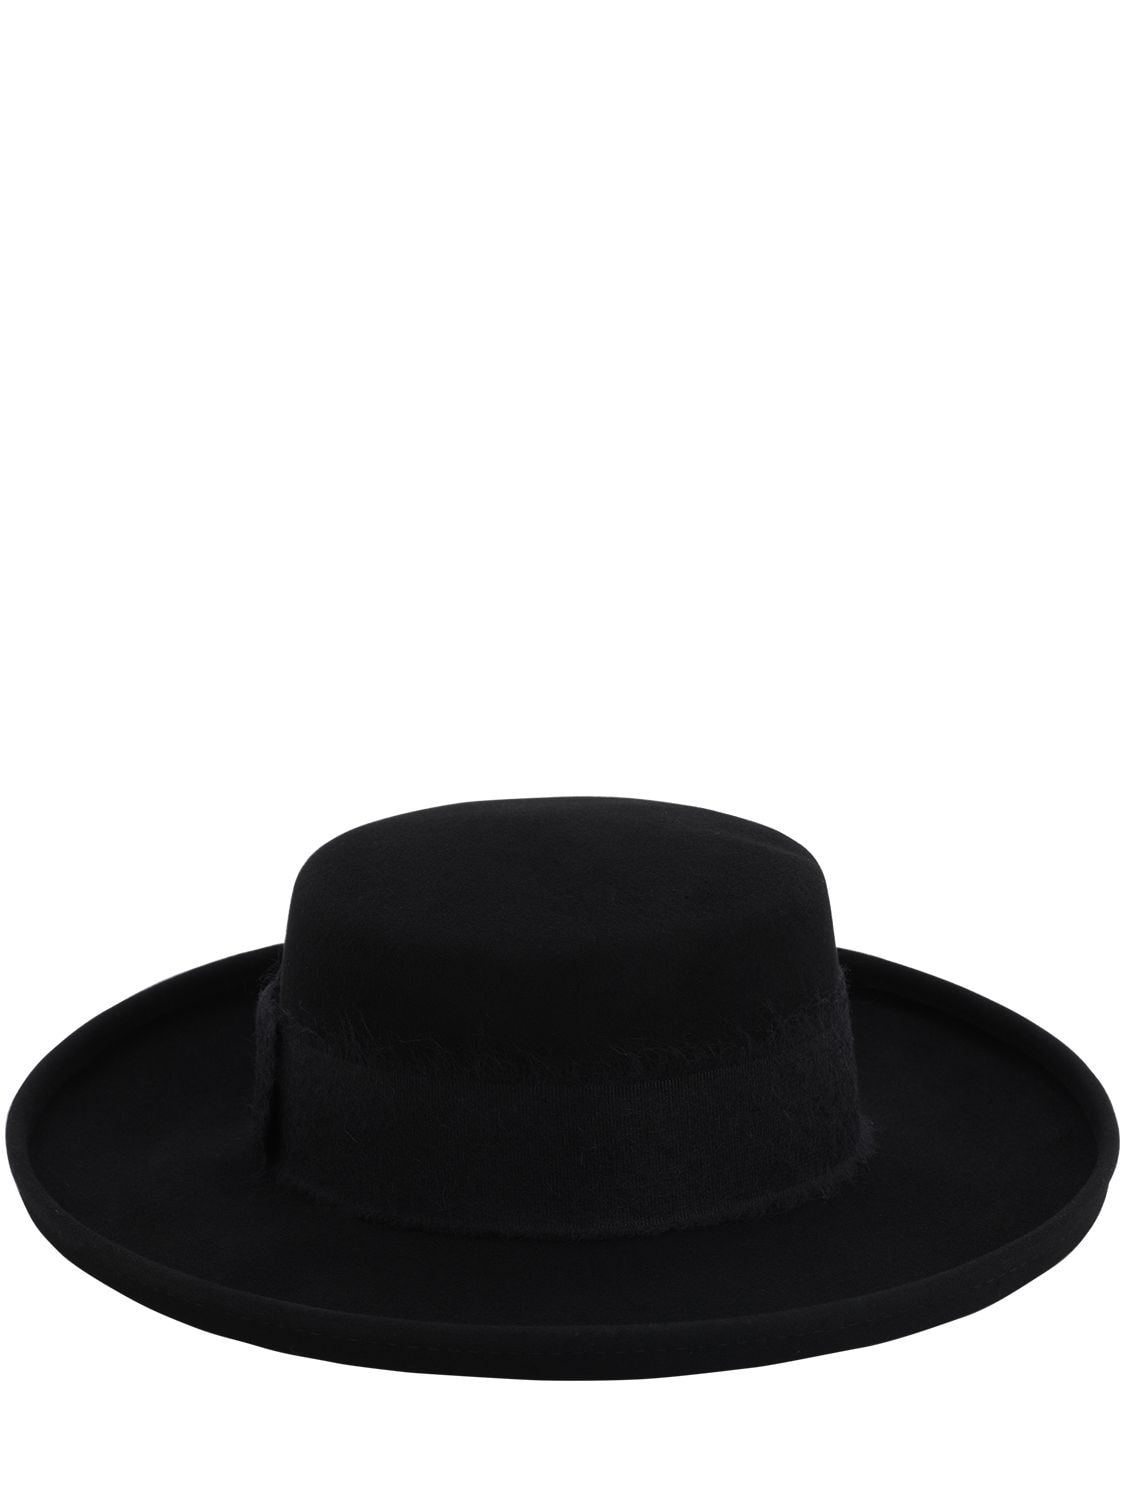 EUGENIA KIM “JULIAN”羊毛毡帽,70I01I005-QKXBQ0S1